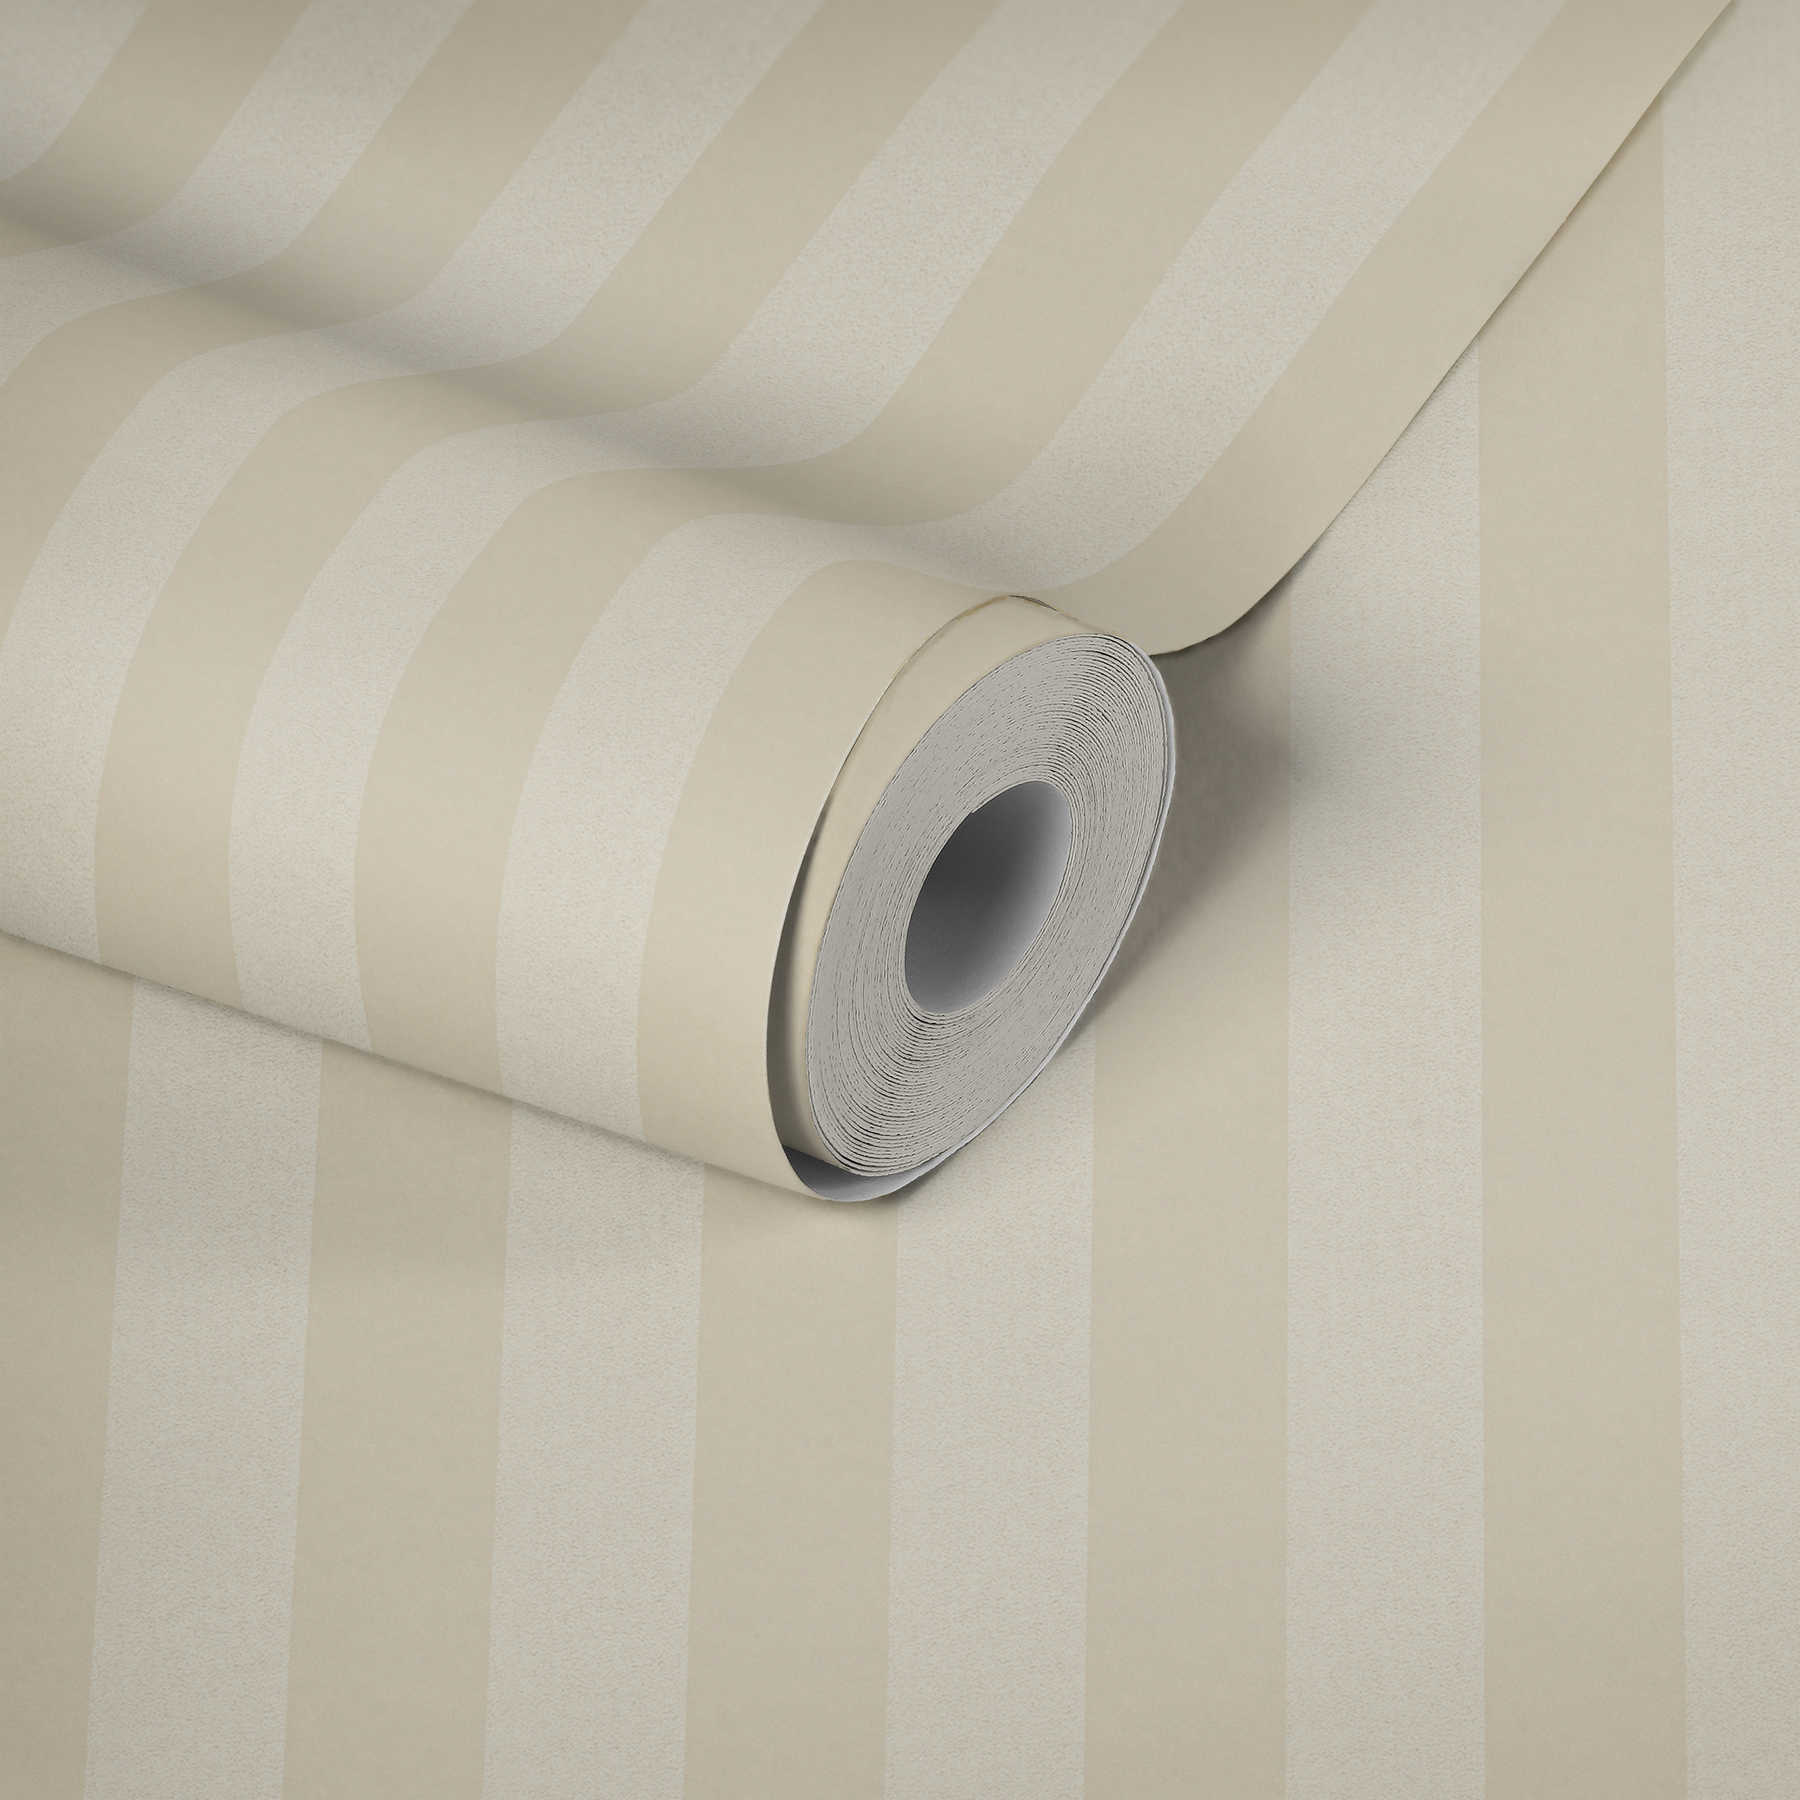             Striped wallpaper with pattern in light cream - beige, cream
        